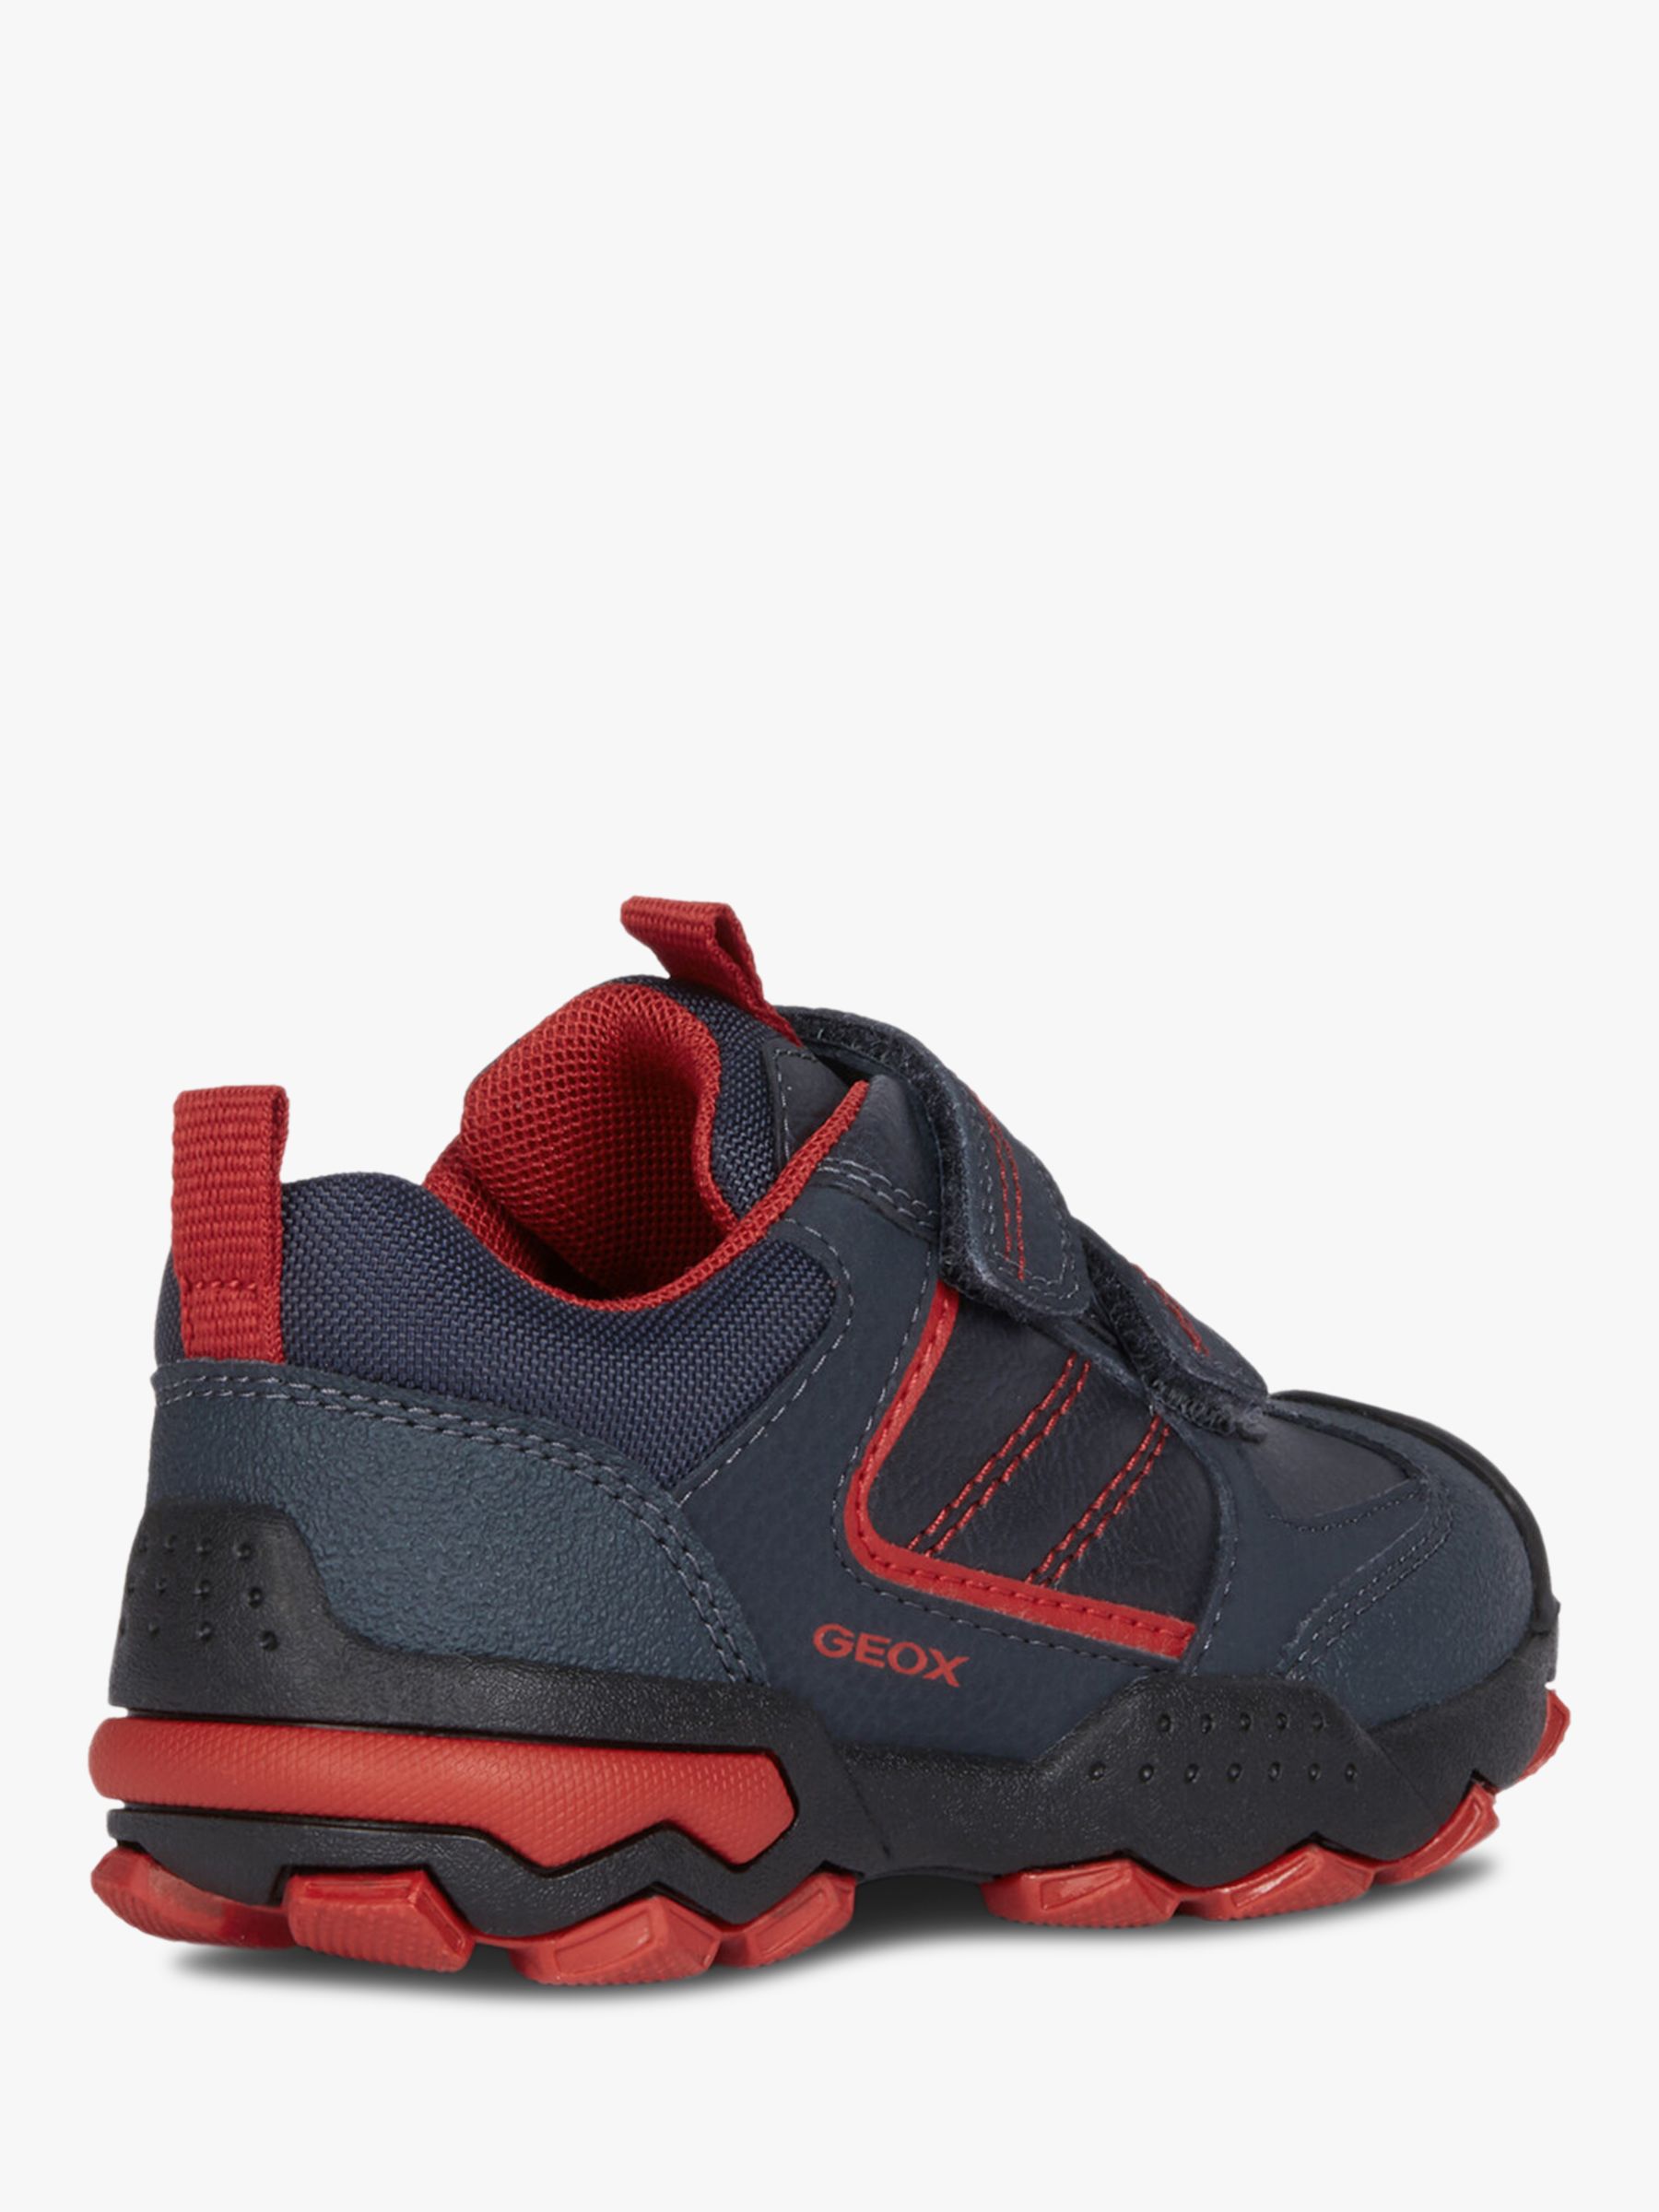 Geox Children's Buller Shoes, Navy/Dark Red